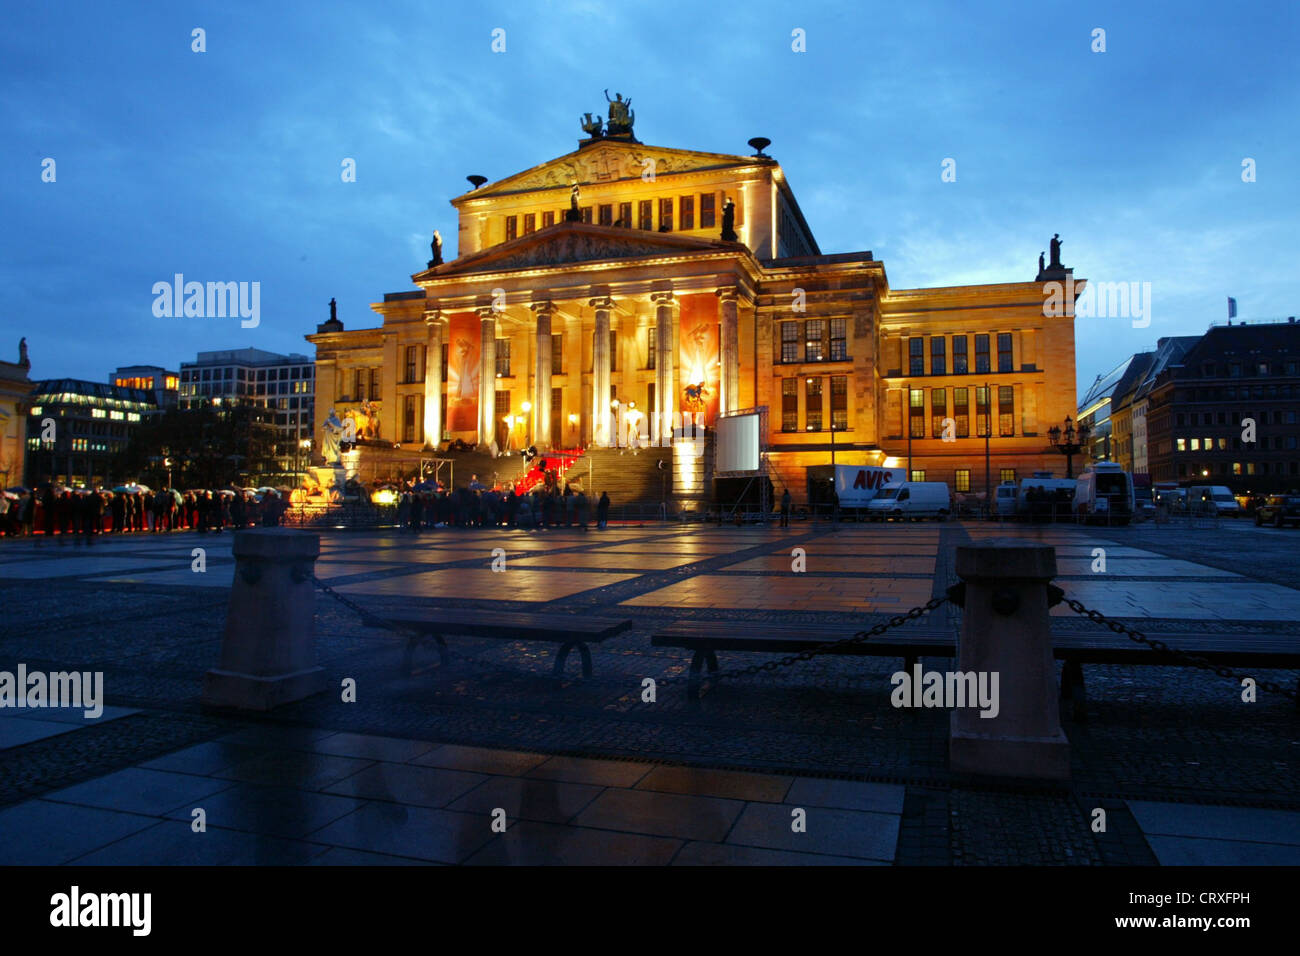 Gendarmenmarkt theater in the evening light Stock Photo